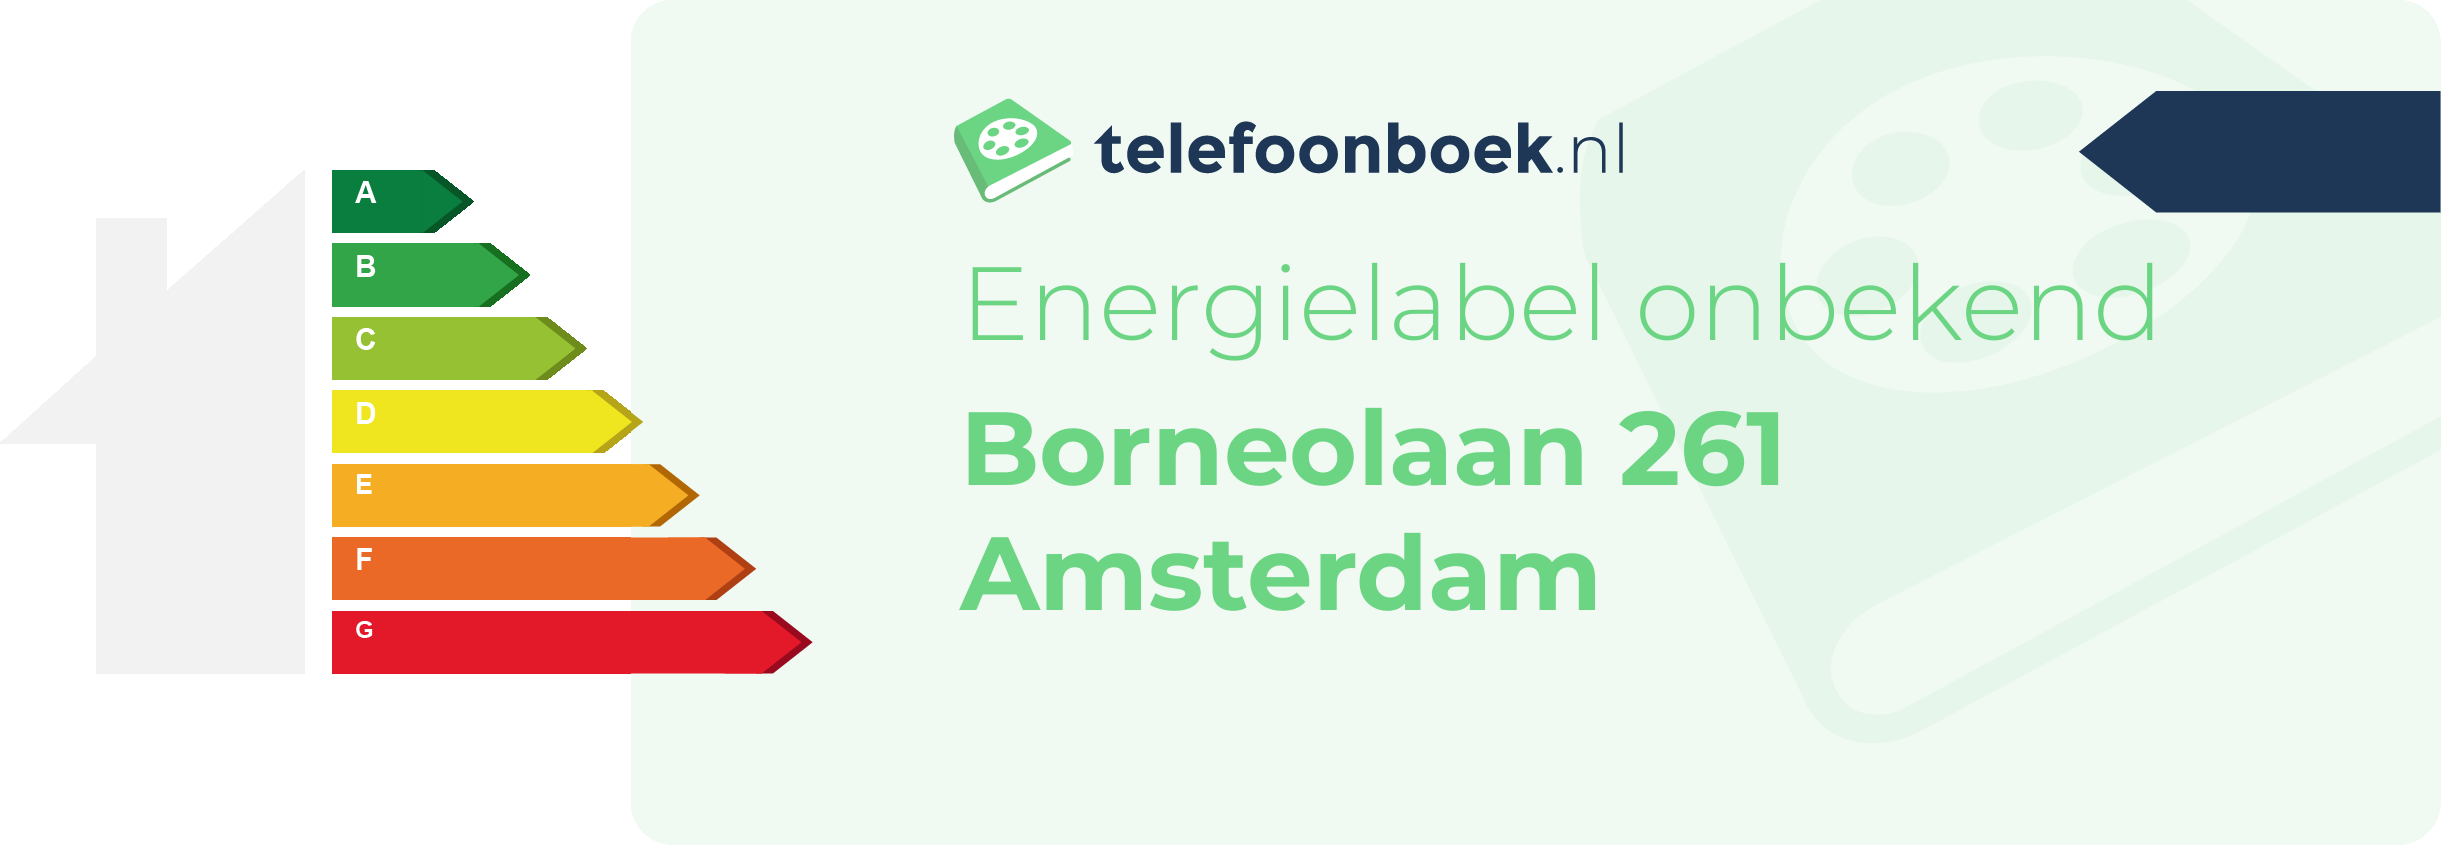 Energielabel Borneolaan 261 Amsterdam